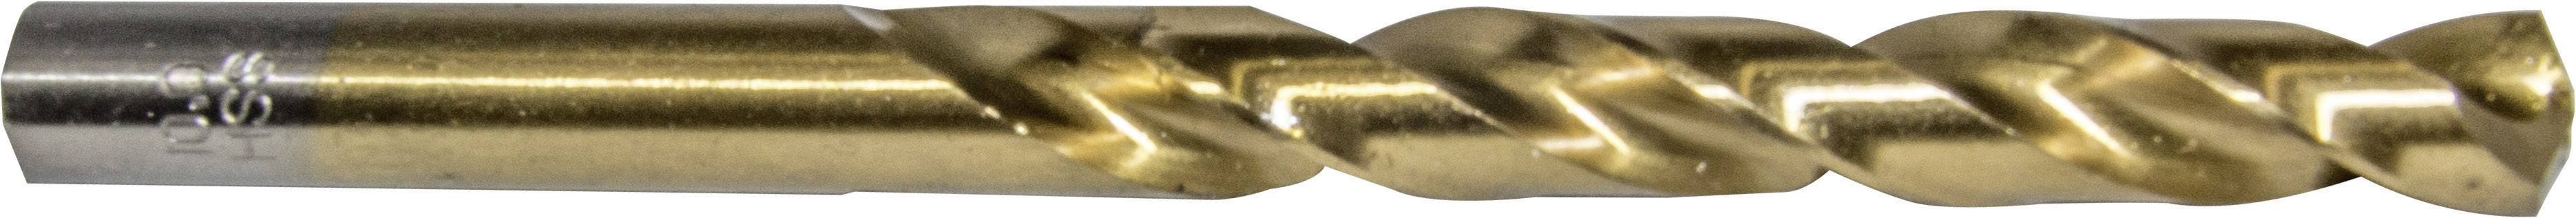 HELLER 29295 5 Metall-Spiralbohrer 10teilig 6 mm Gesamtlänge 93 mm 10 St.